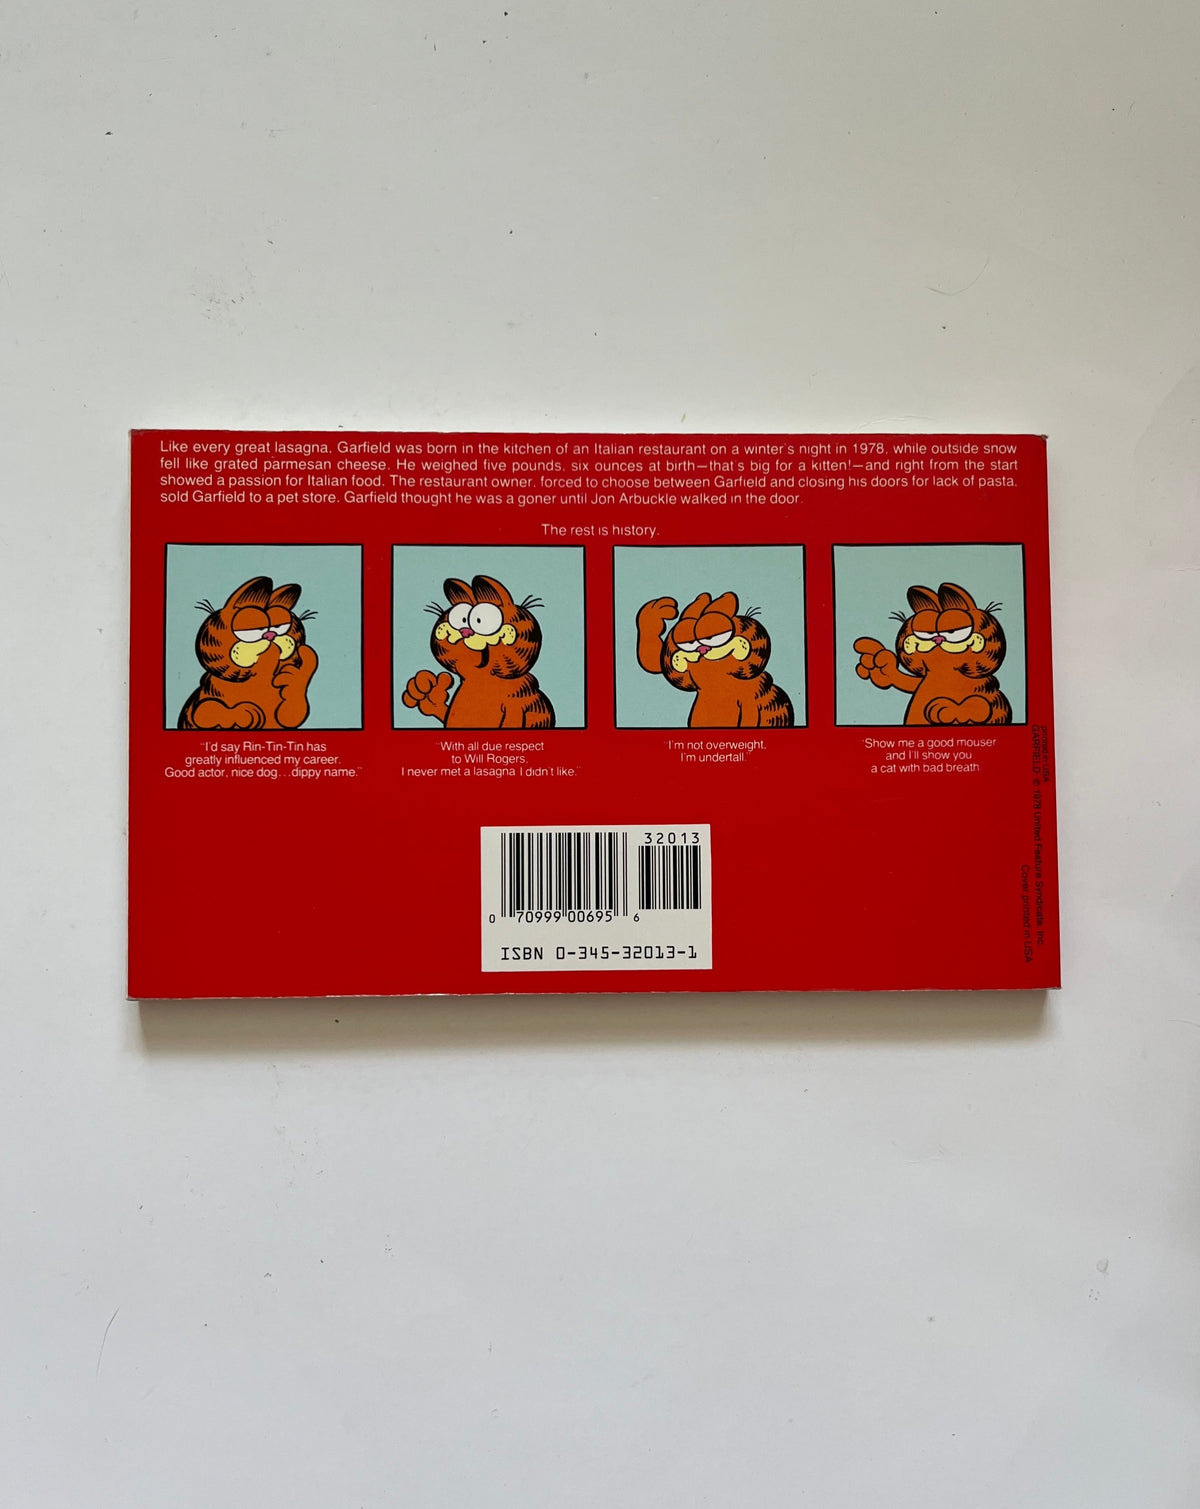 DONATE: Garfield at Large by Jim Davis